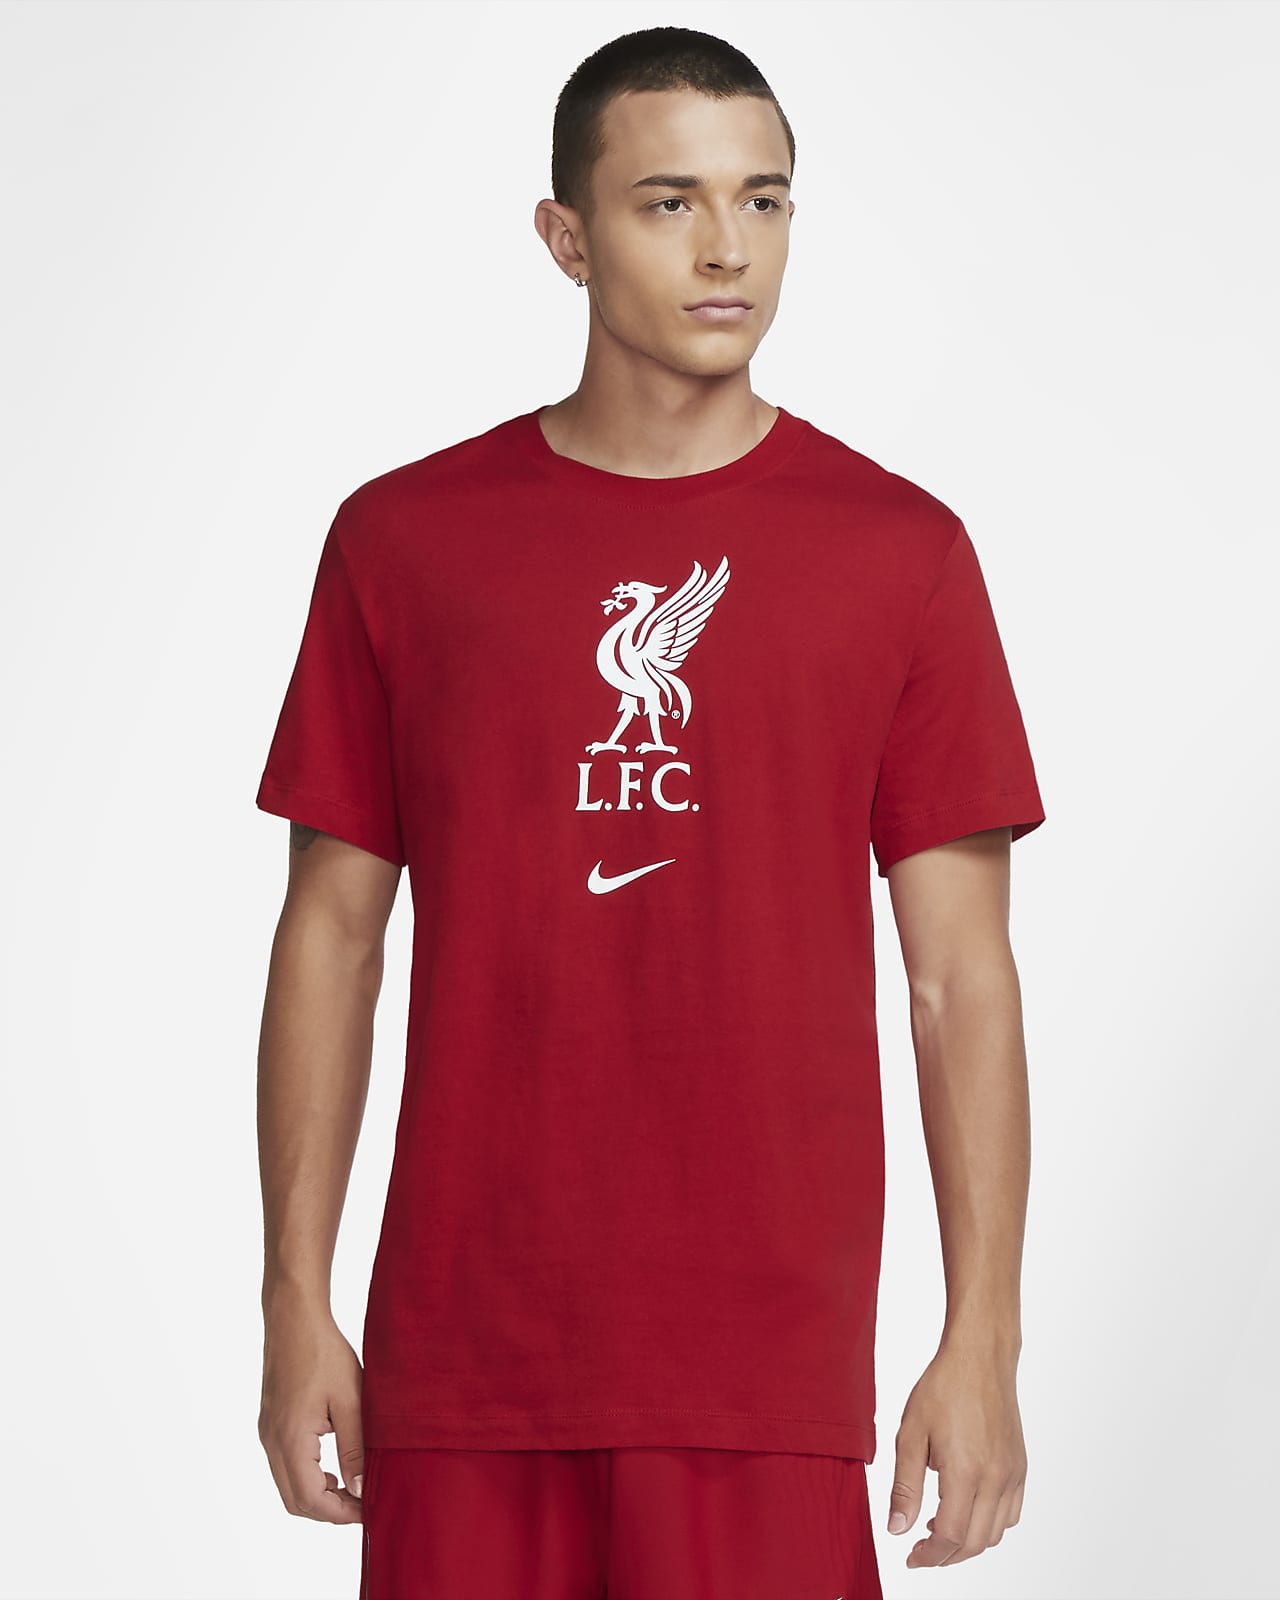 Liverpool FC Men's Football T-Shirt